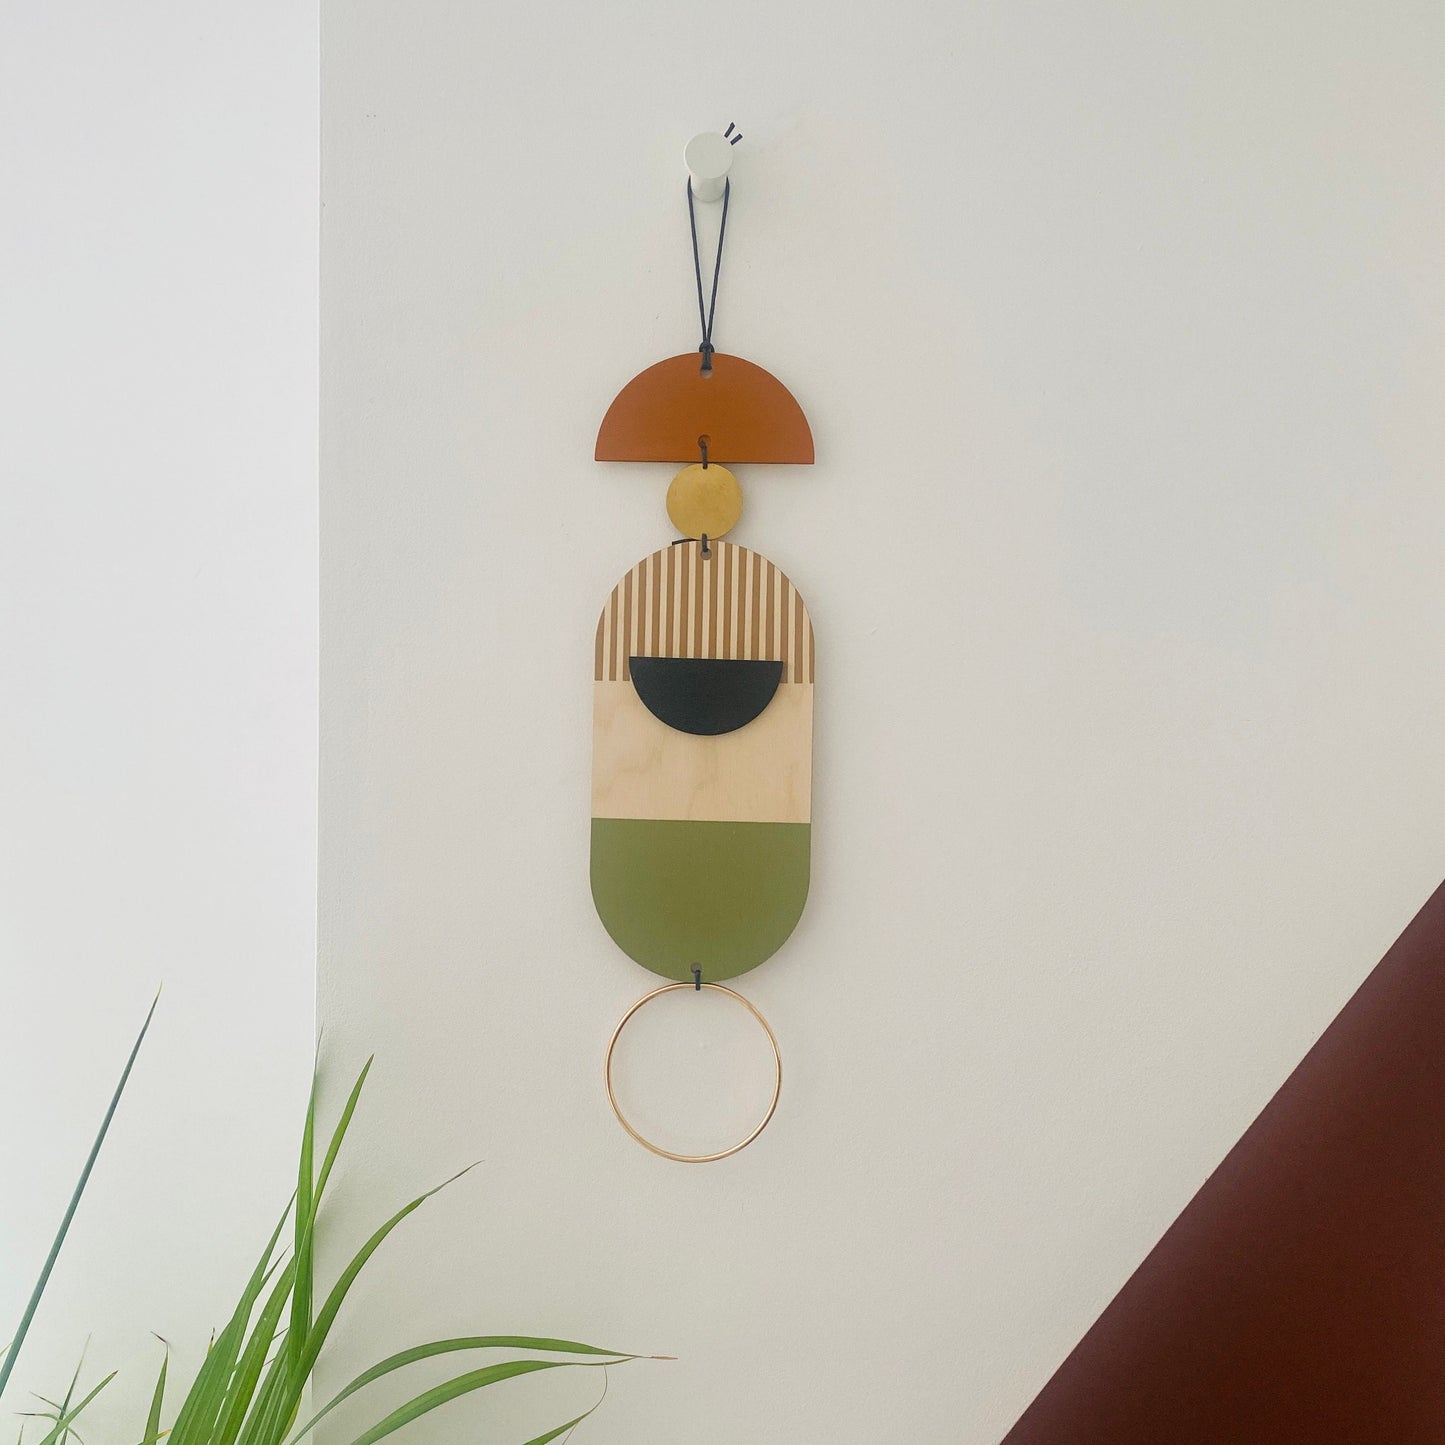 Small Modern Wall Hanging - Cute Geometric Art - Metal Wood Decor - Unusual Wall Hanging - Wall Jewellery- Contemporary Designs - Home Decor